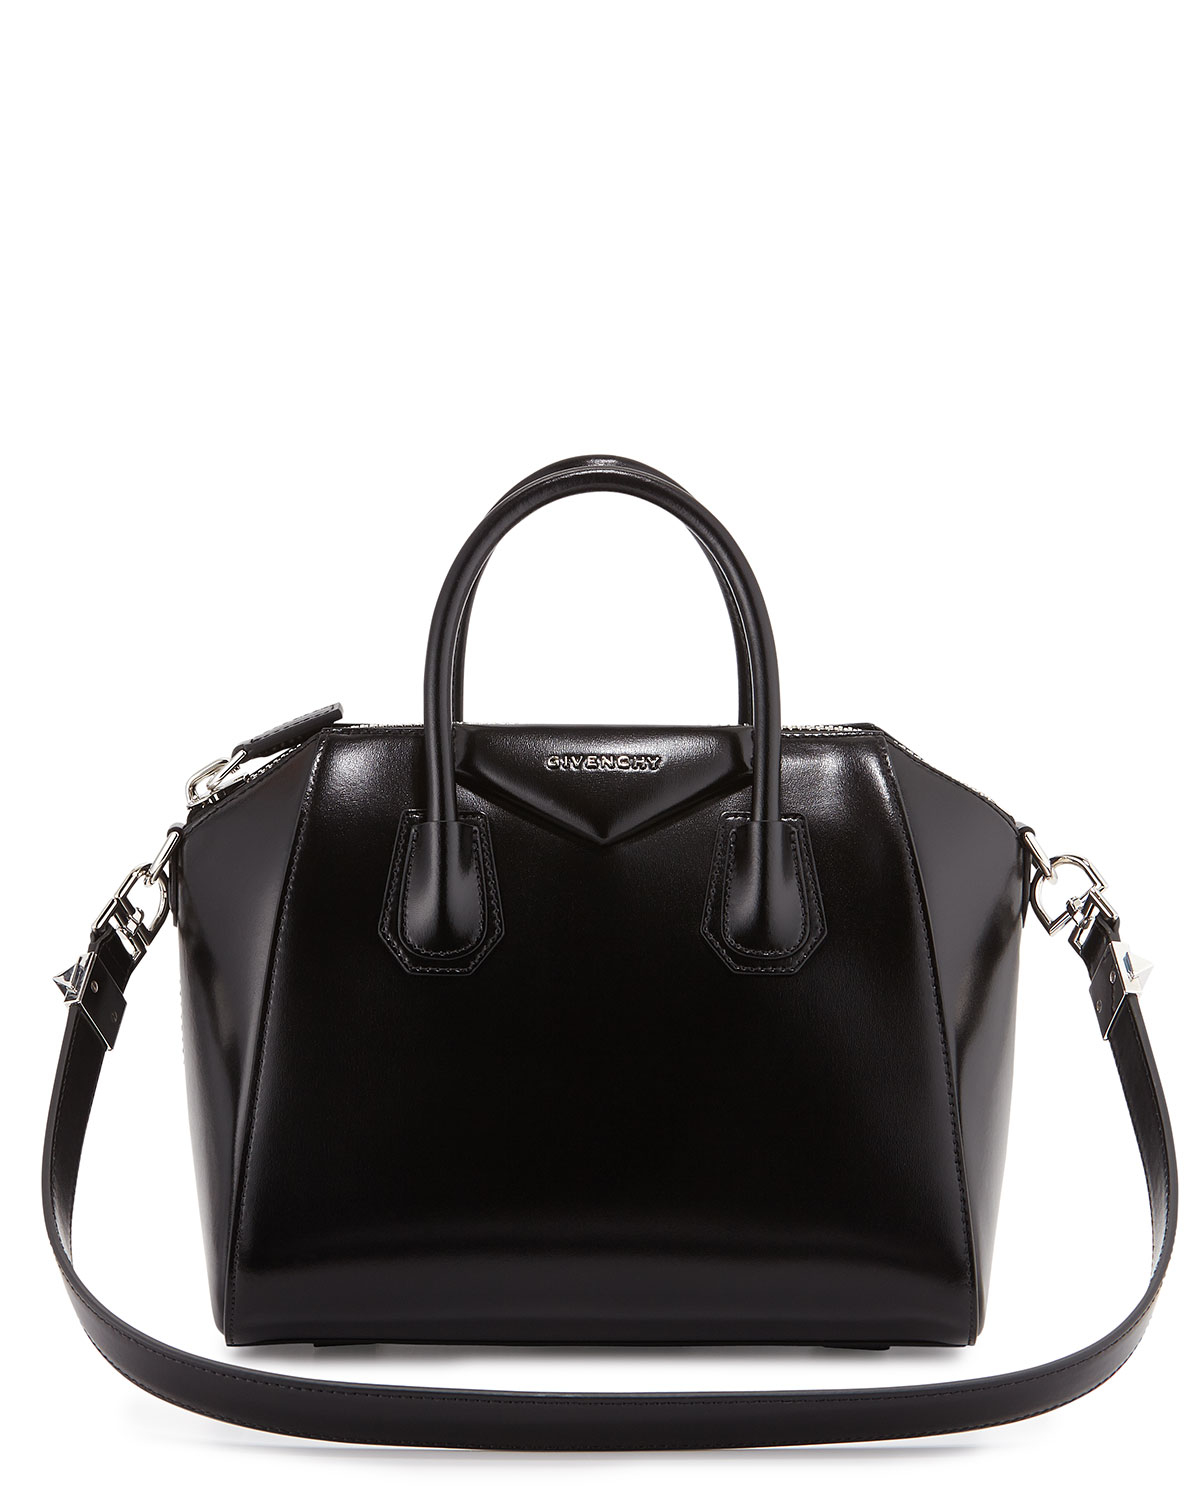 Givenchy Antigona Small Leather Satchel Bag in Black | Lyst